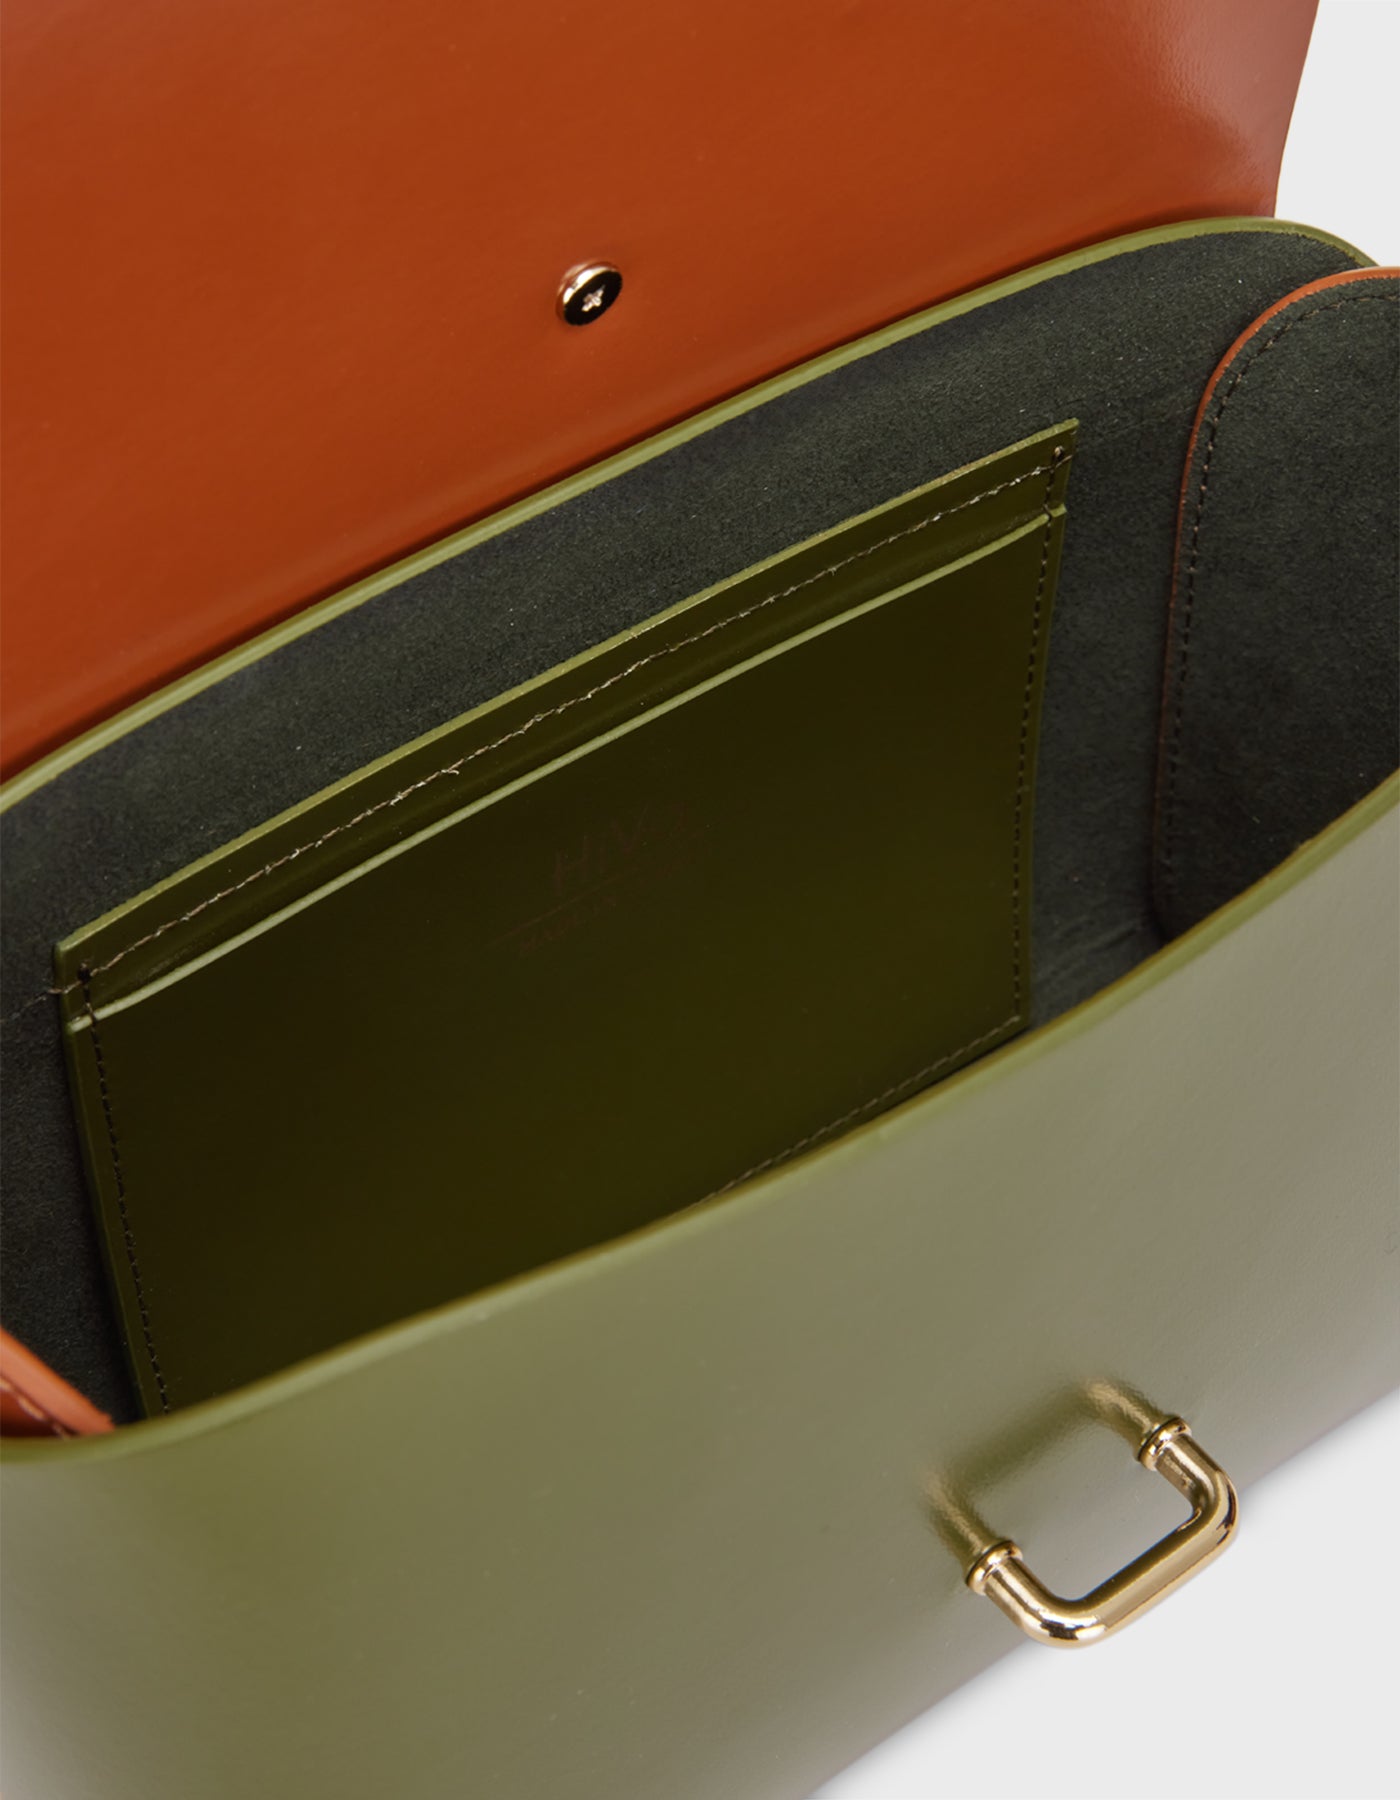 Harmonia Shoulder Bag - Finest Quality HiVa Atelier GmbH Leather Accessories